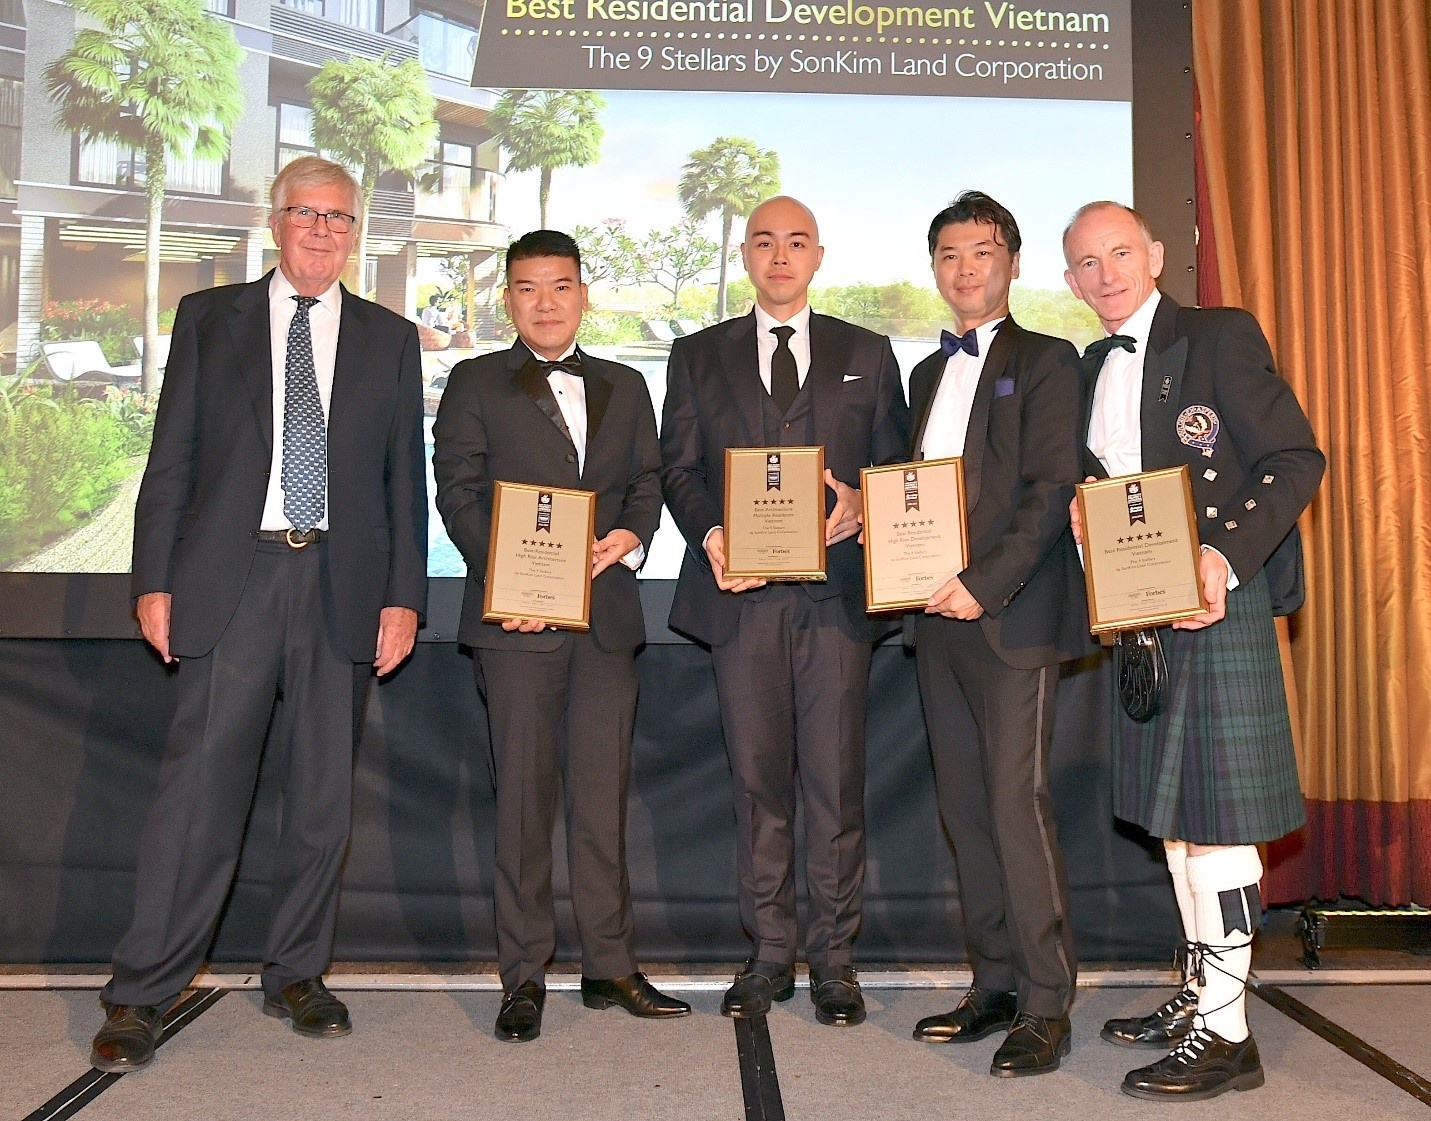 The 9 Stellars developed by SonKim Land scores five prestigious awards